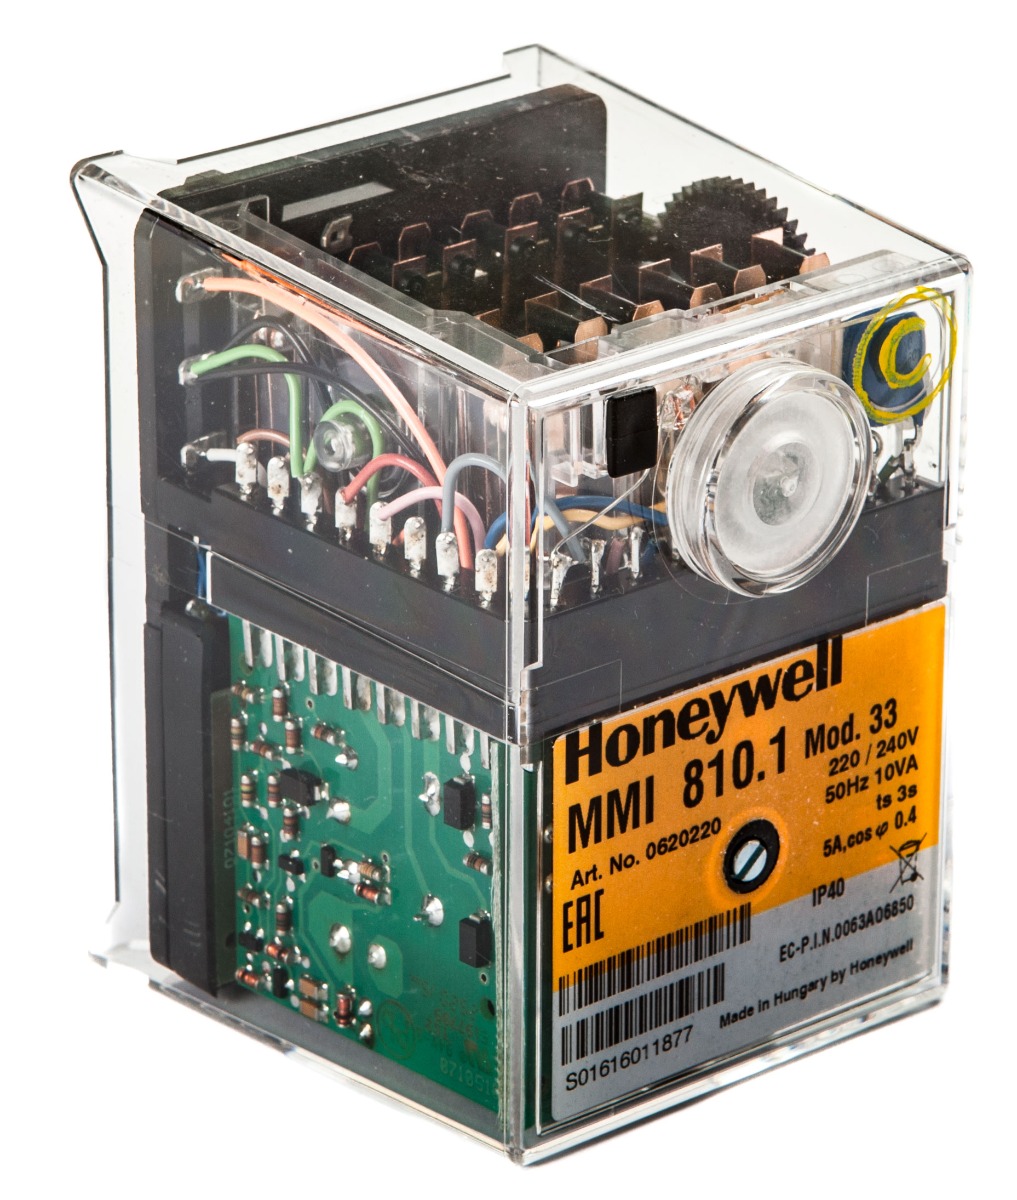 MMI 810.1 Mod 43 240v Control Box